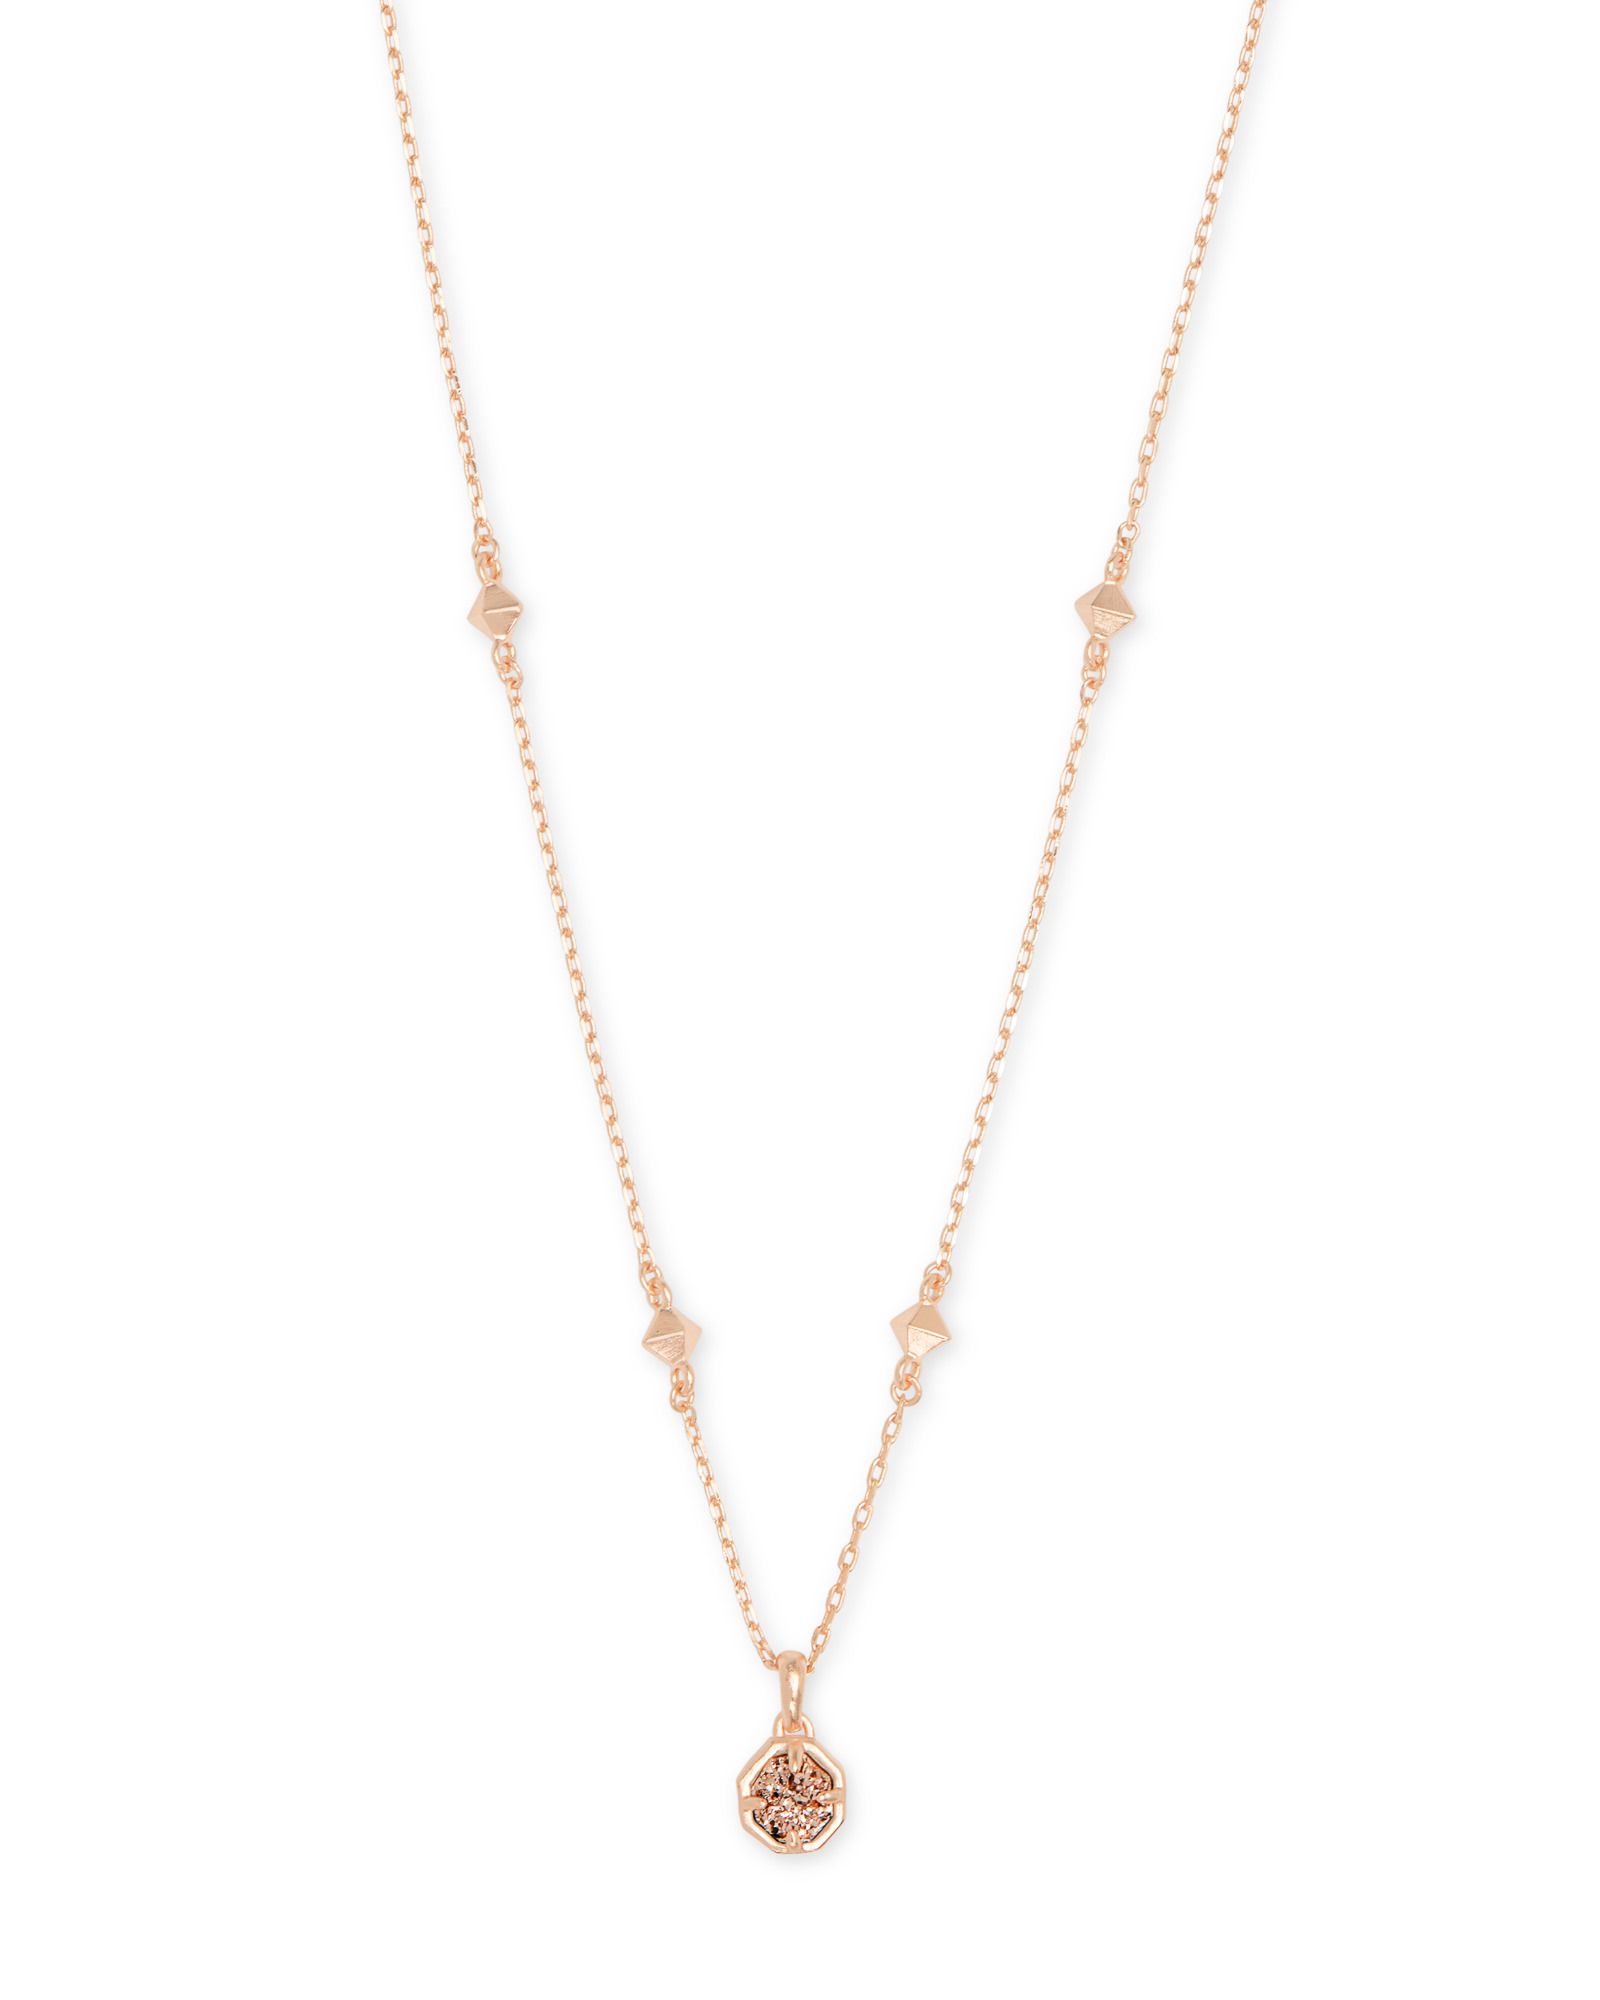 Nola Rose Gold Pendant Necklace in Rose Gold Drusy | Kendra Scott | Kendra Scott